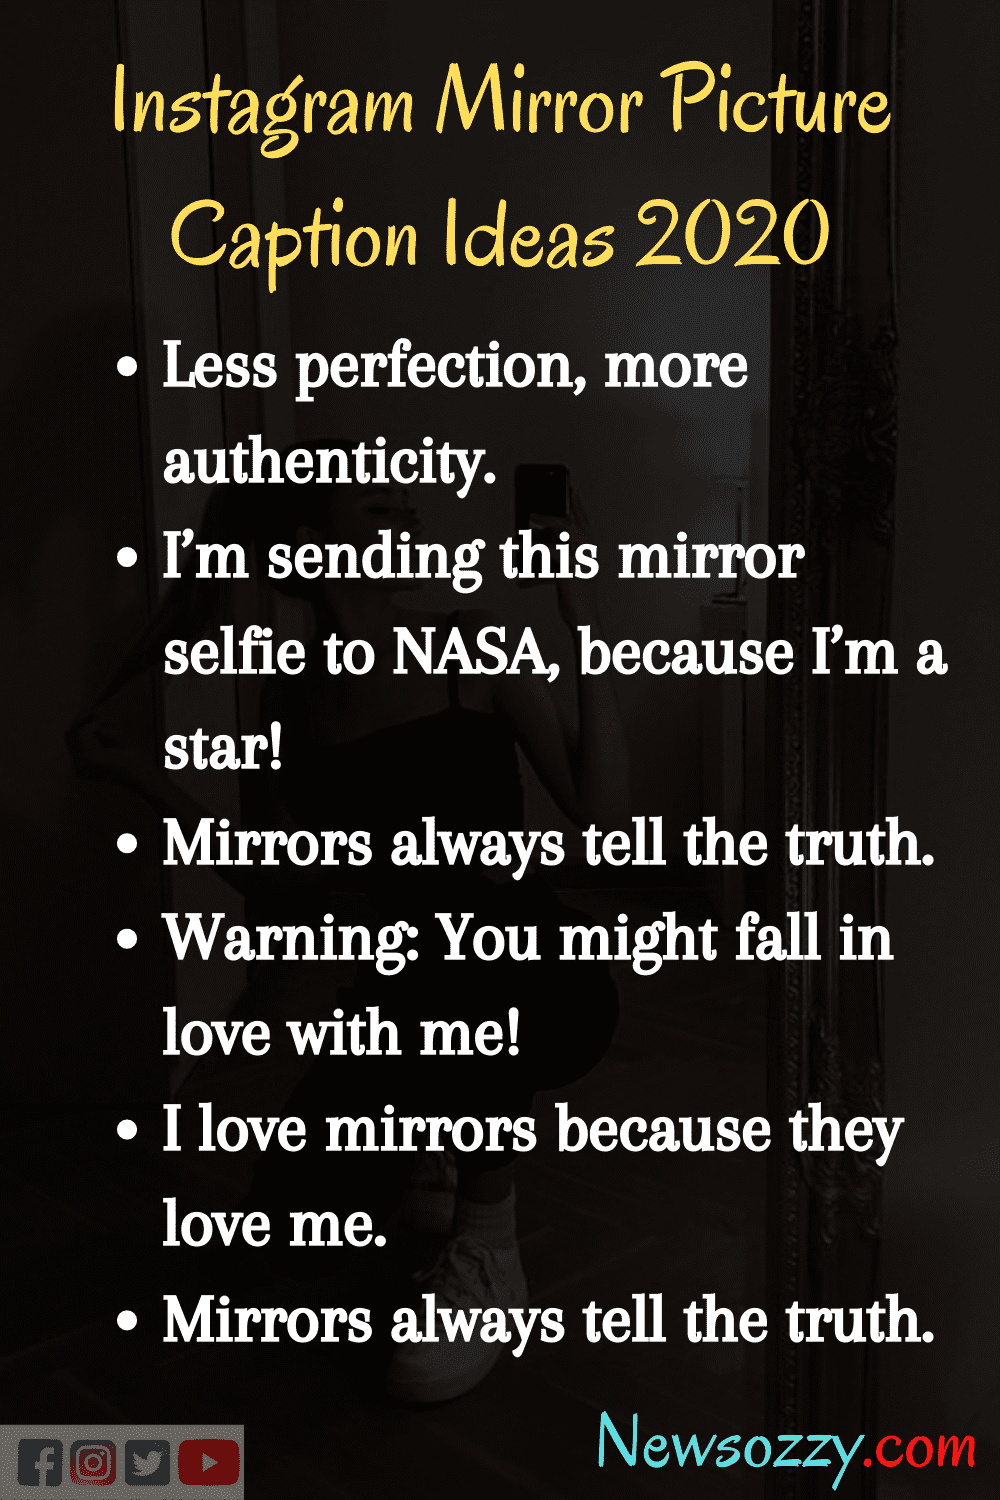 mirror picture caption ideas for instagram